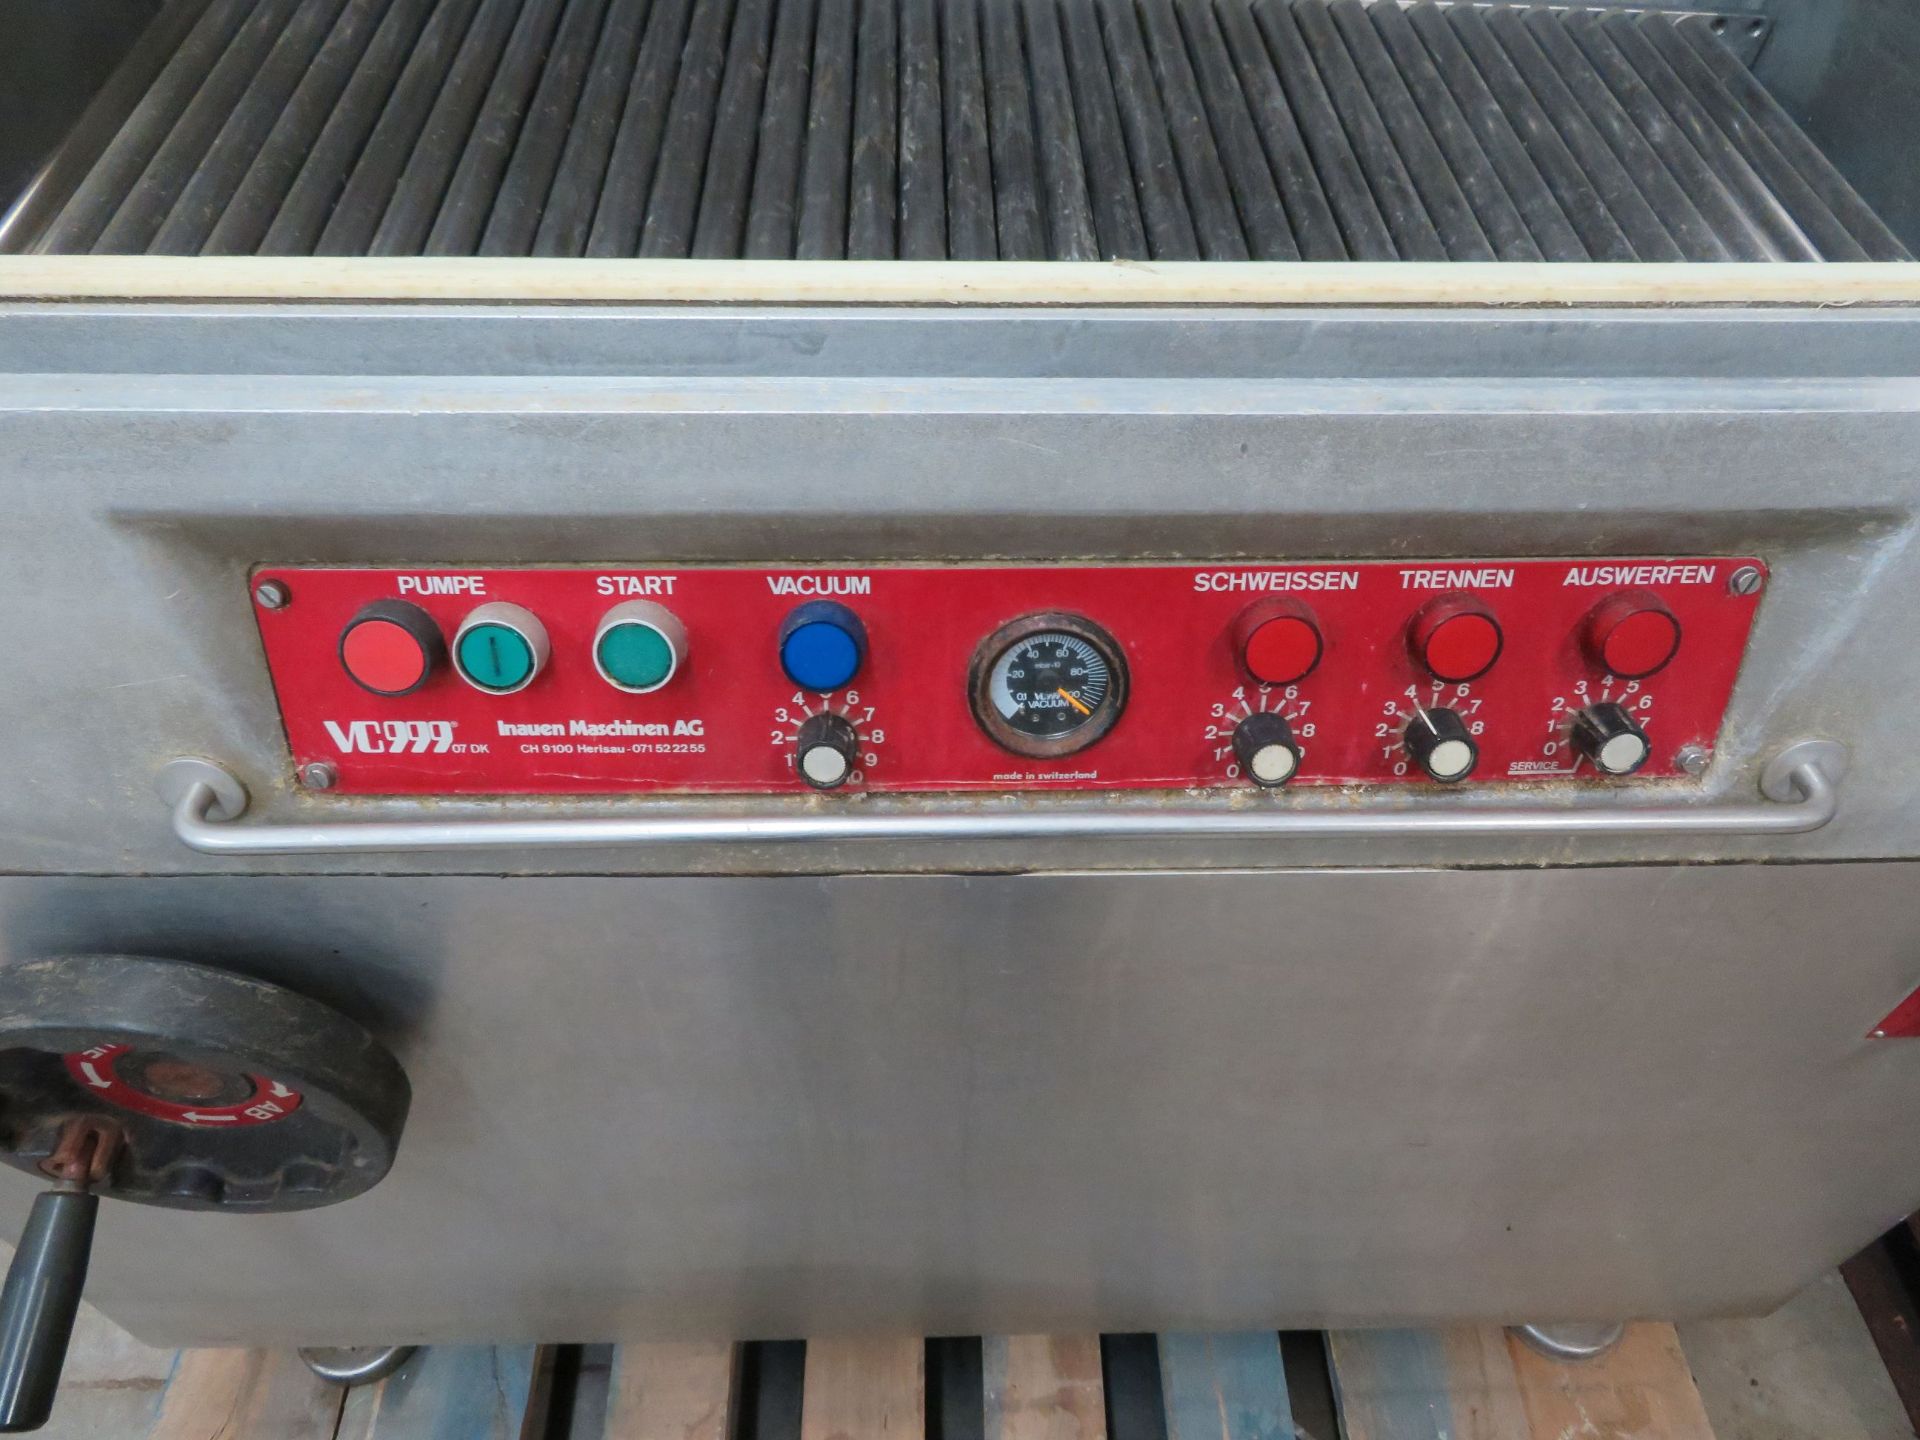 INAUEN MASCHINEN vacuum packaging machine, Mod: VC 999, 575 Volts - Image 3 of 4